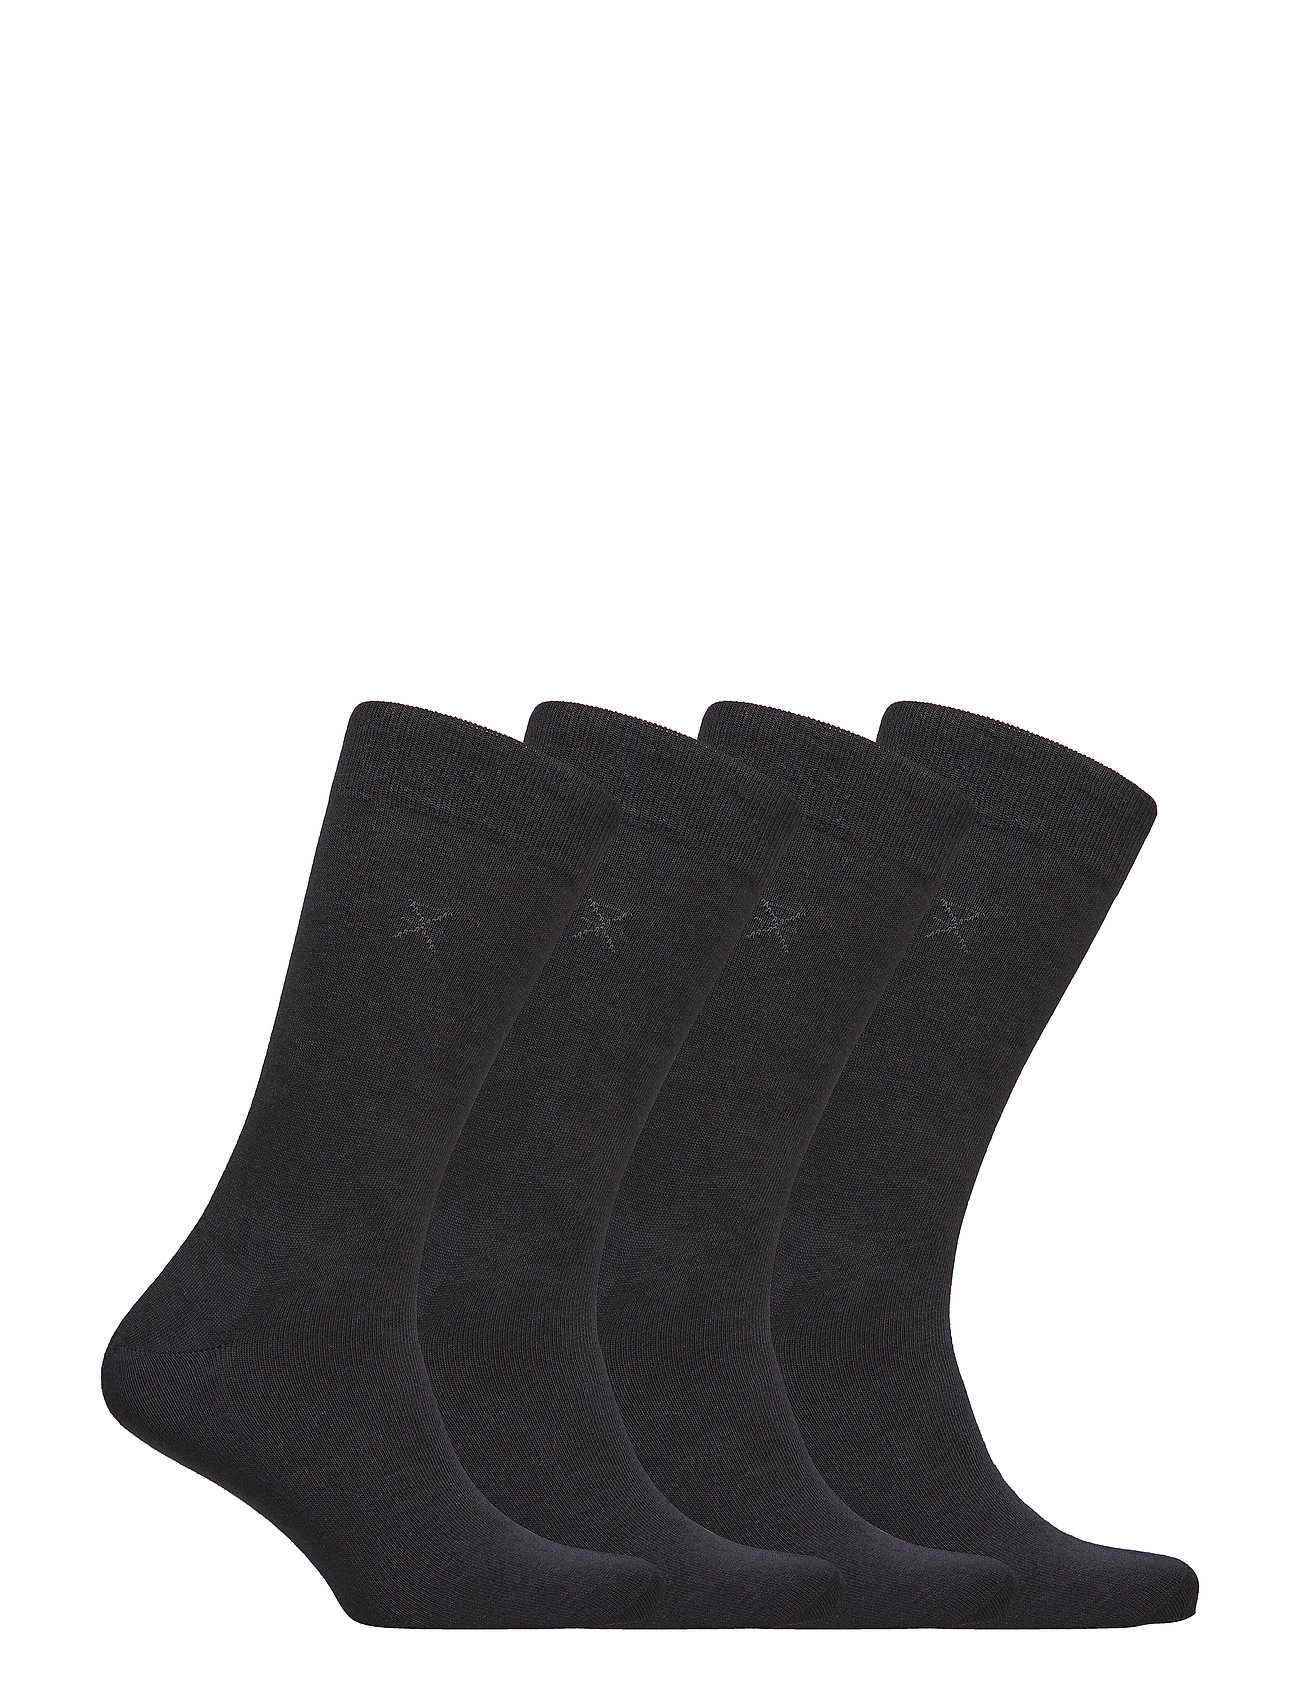 Jbs Of Dk Socks Cotton 4-Pack Underwear Socks Regular Socks Sort JBS Of Denmark